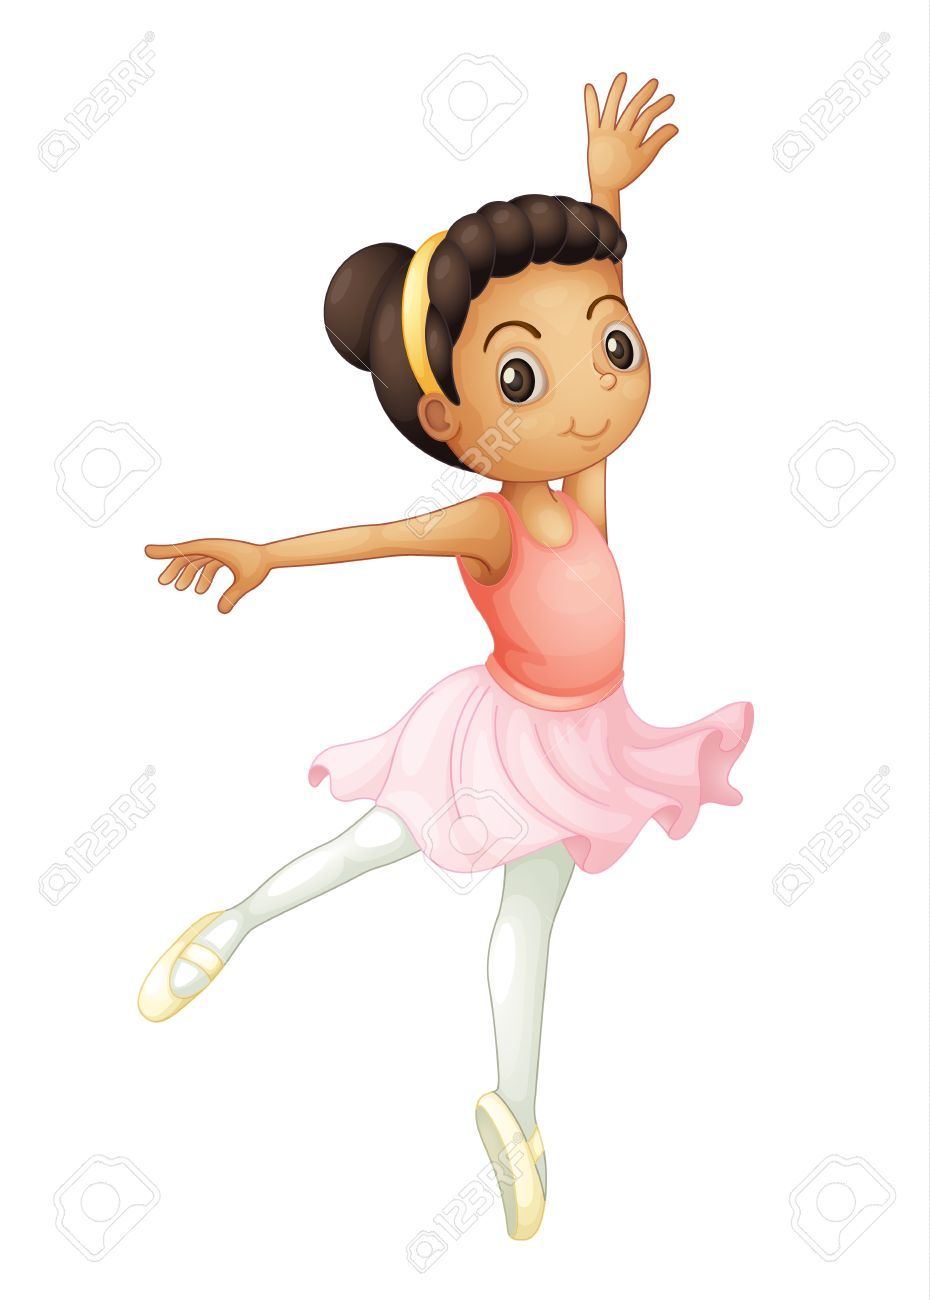 Ballet clipart kid. Wallpapers little dance girl